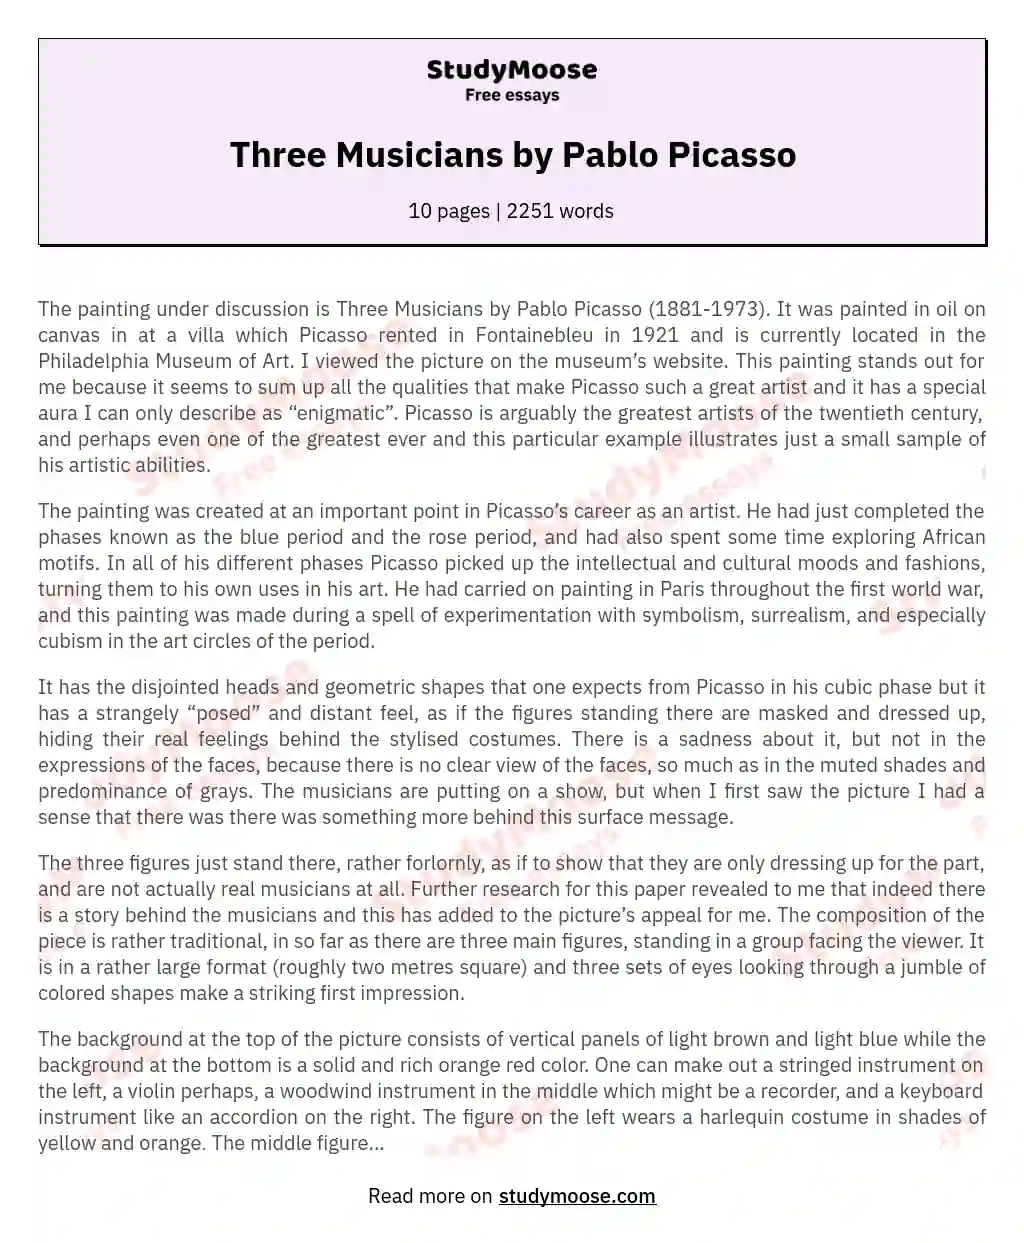 Three Musicians by Pablo Picasso essay